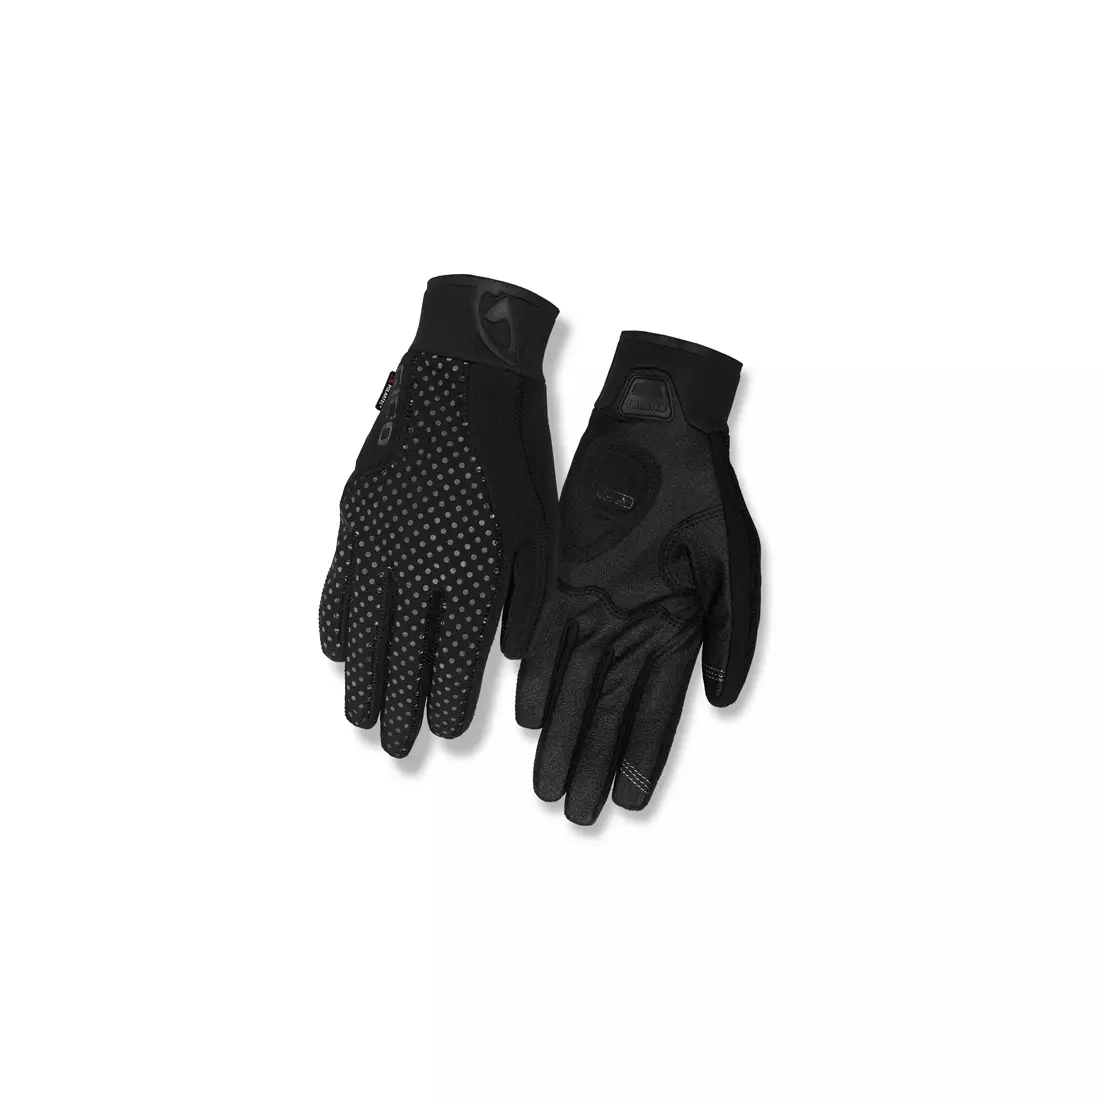 GIRO winter cycling gloves inferna black GR-7084766